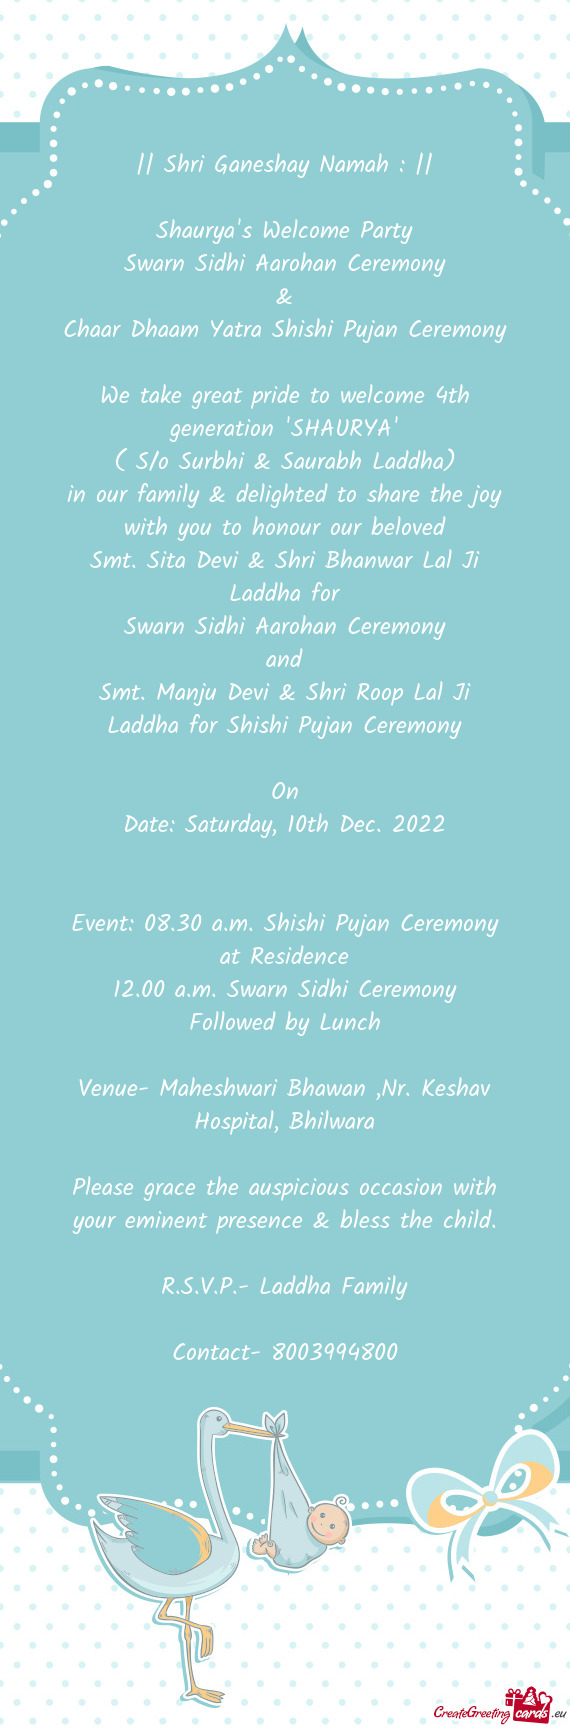 Smt. Manju Devi & Shri Roop Lal Ji Laddha for Shishi Pujan Ceremony